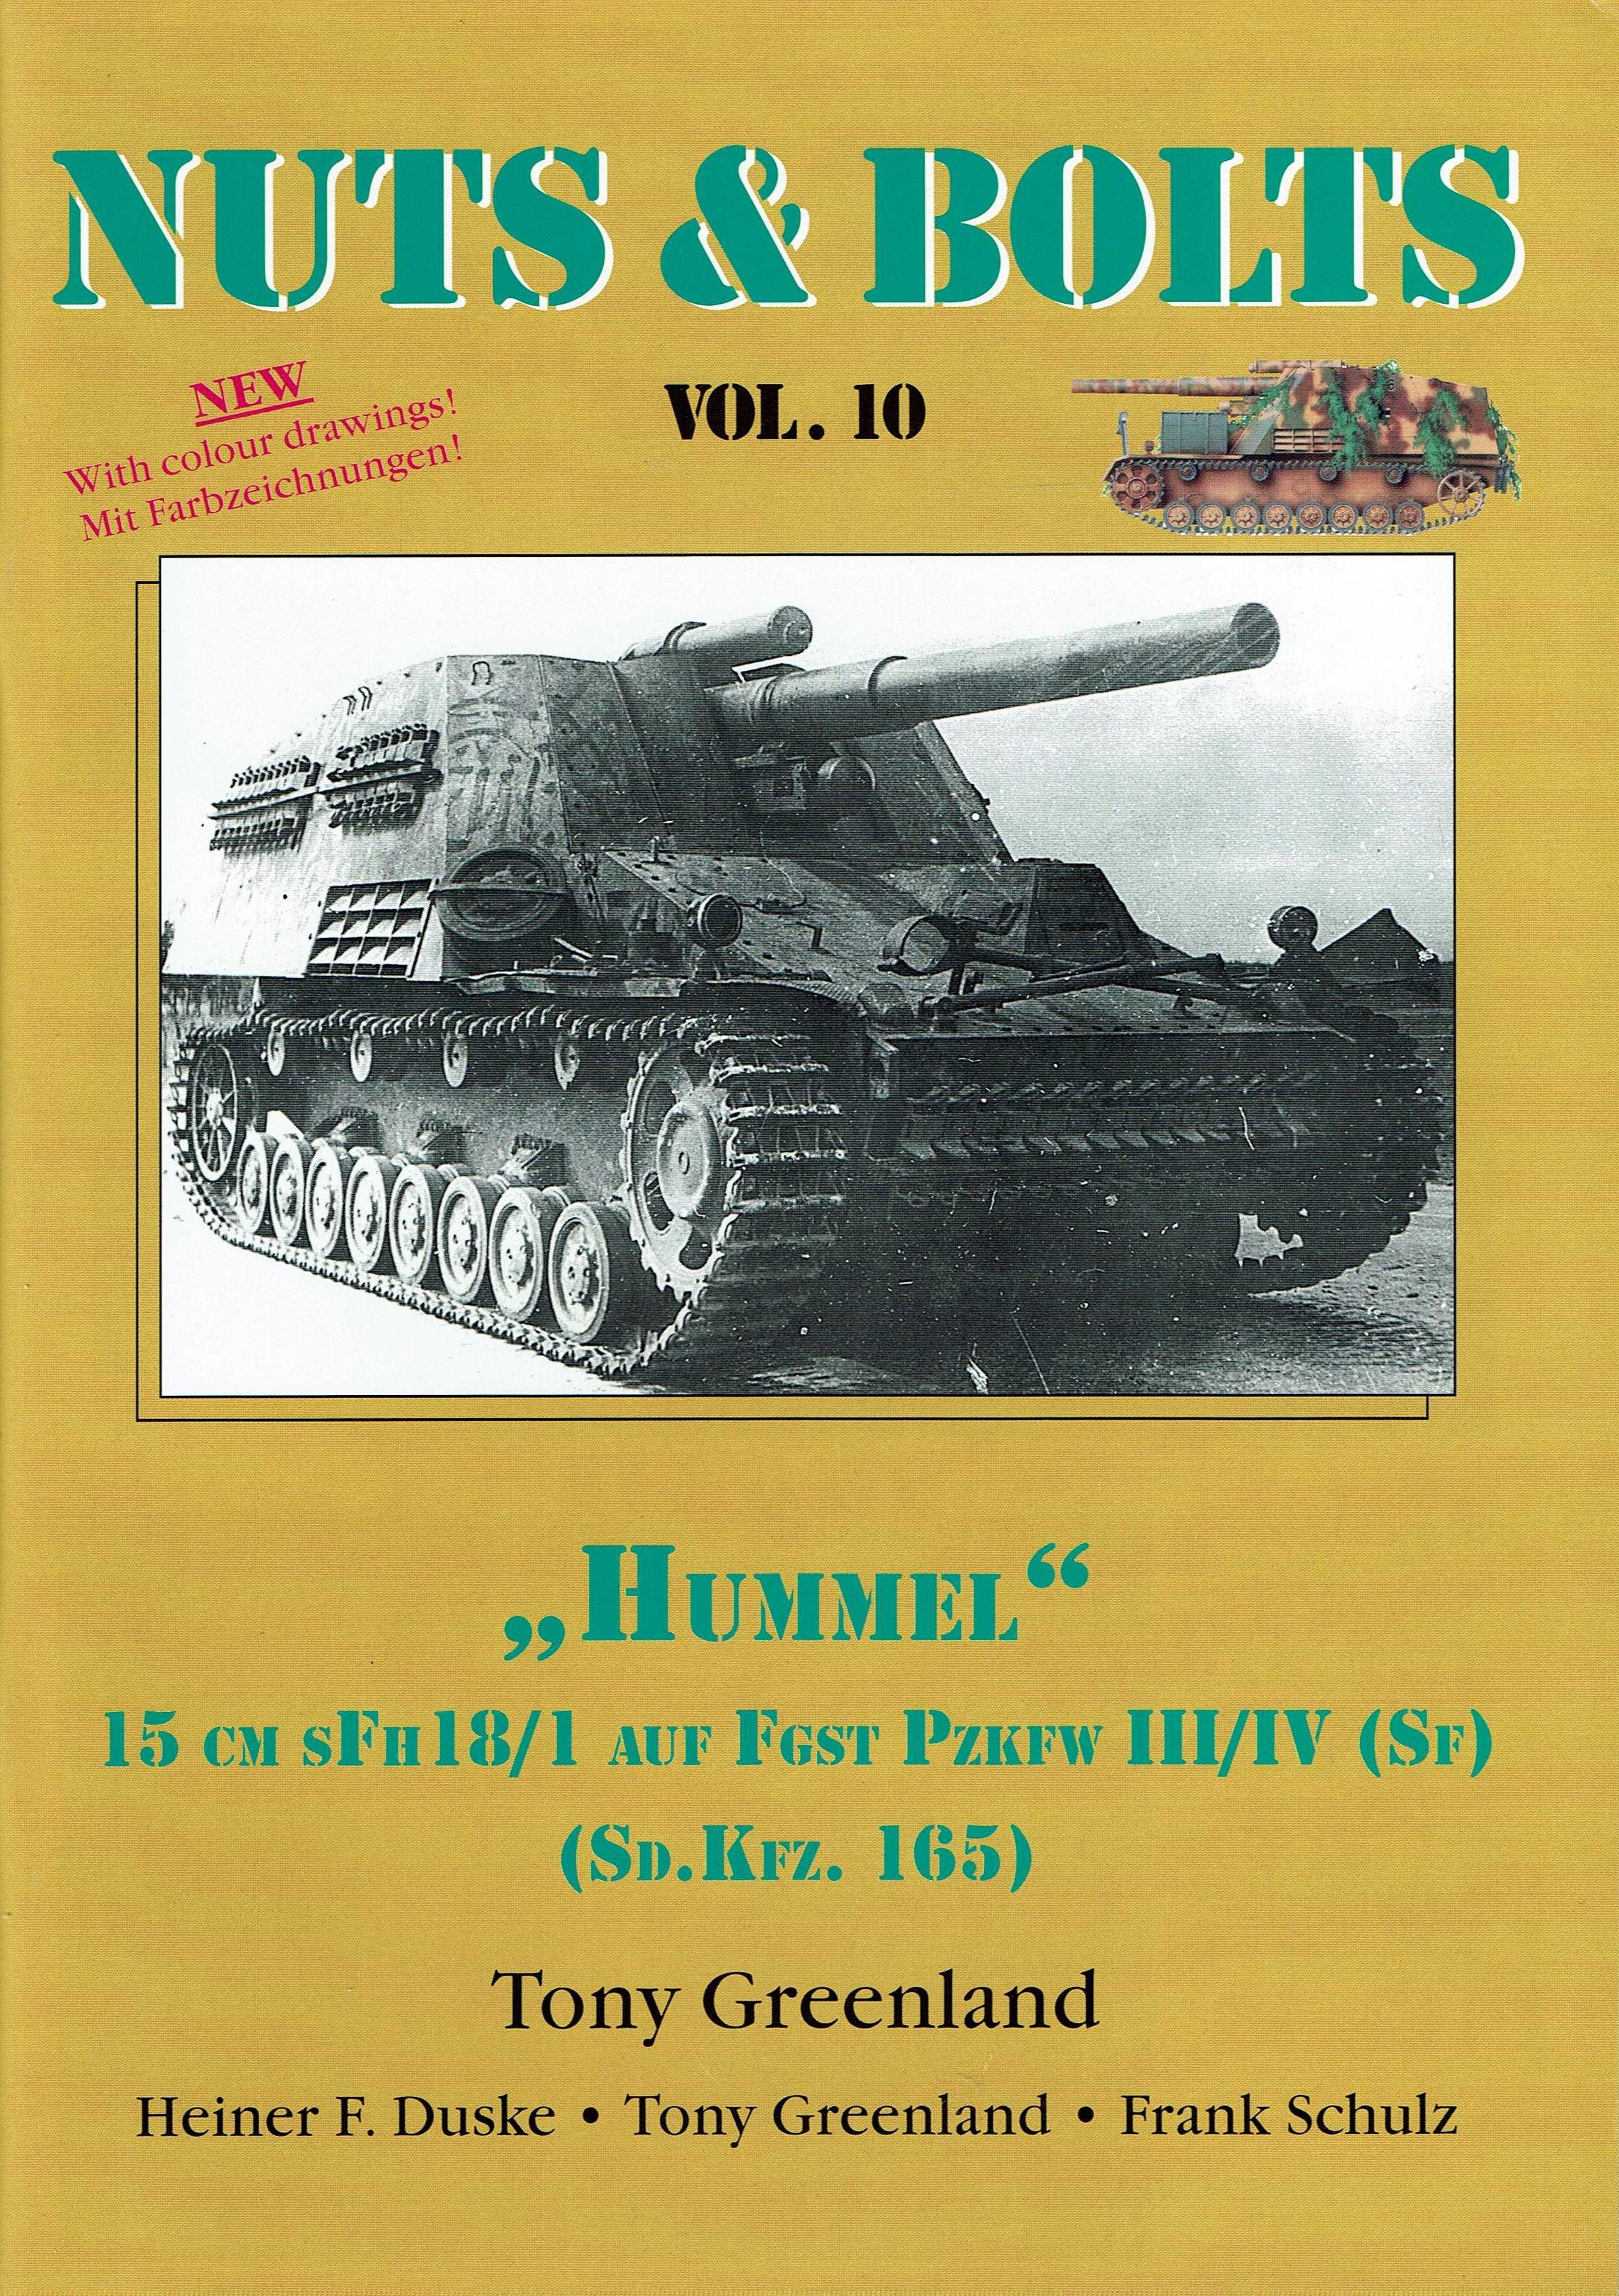 Nuts & Bolts vol.10 - "Hummel" NOWY